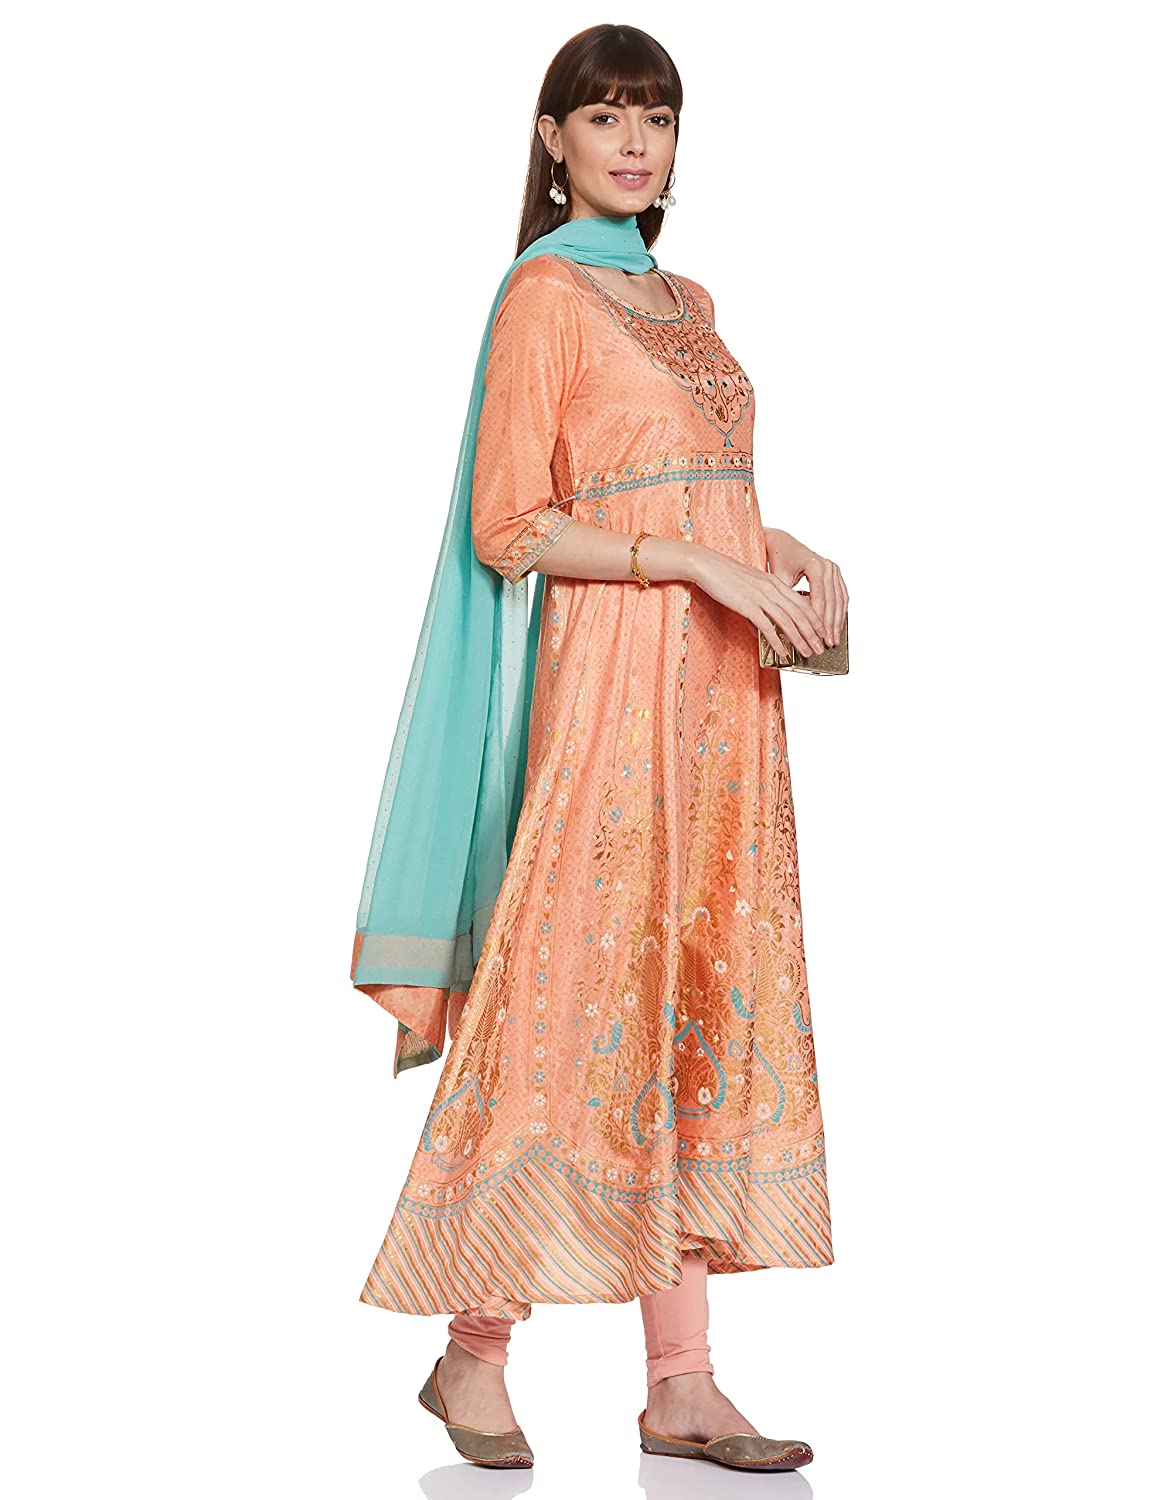 Aurelia Women's Polyester Peach Printed Ethnic Dress-Dupatta Set Ankle Length